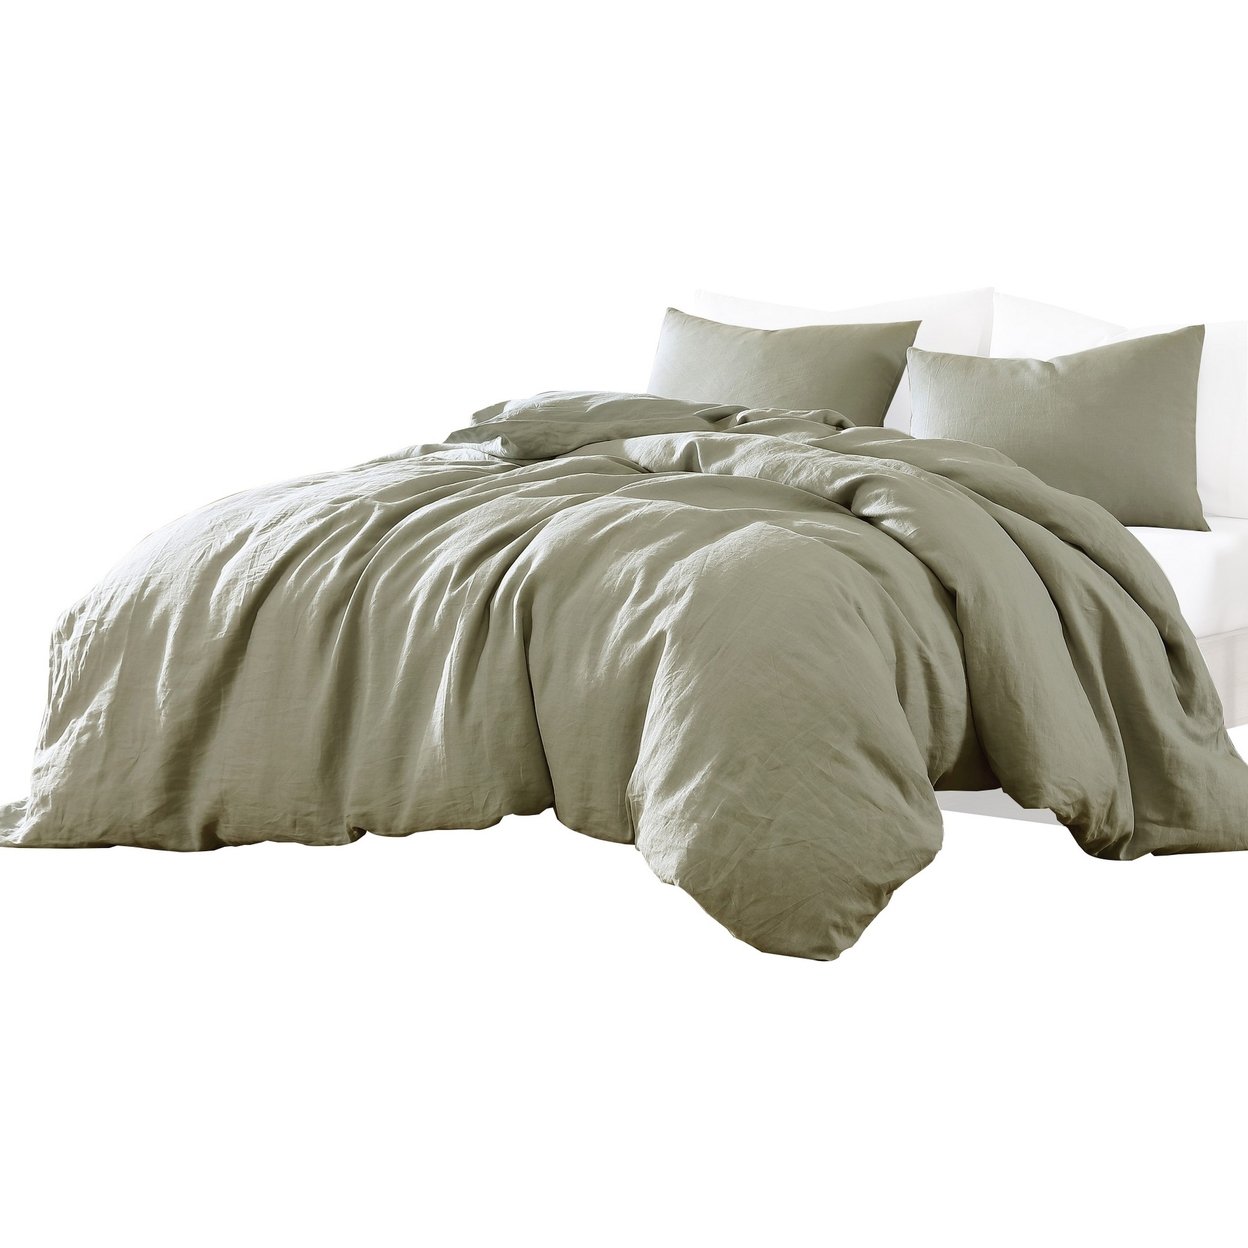 Edge 4 Piece King Size Duvet Comforter Set, Washed Linen, Sage Green - Saltoro Sherpi